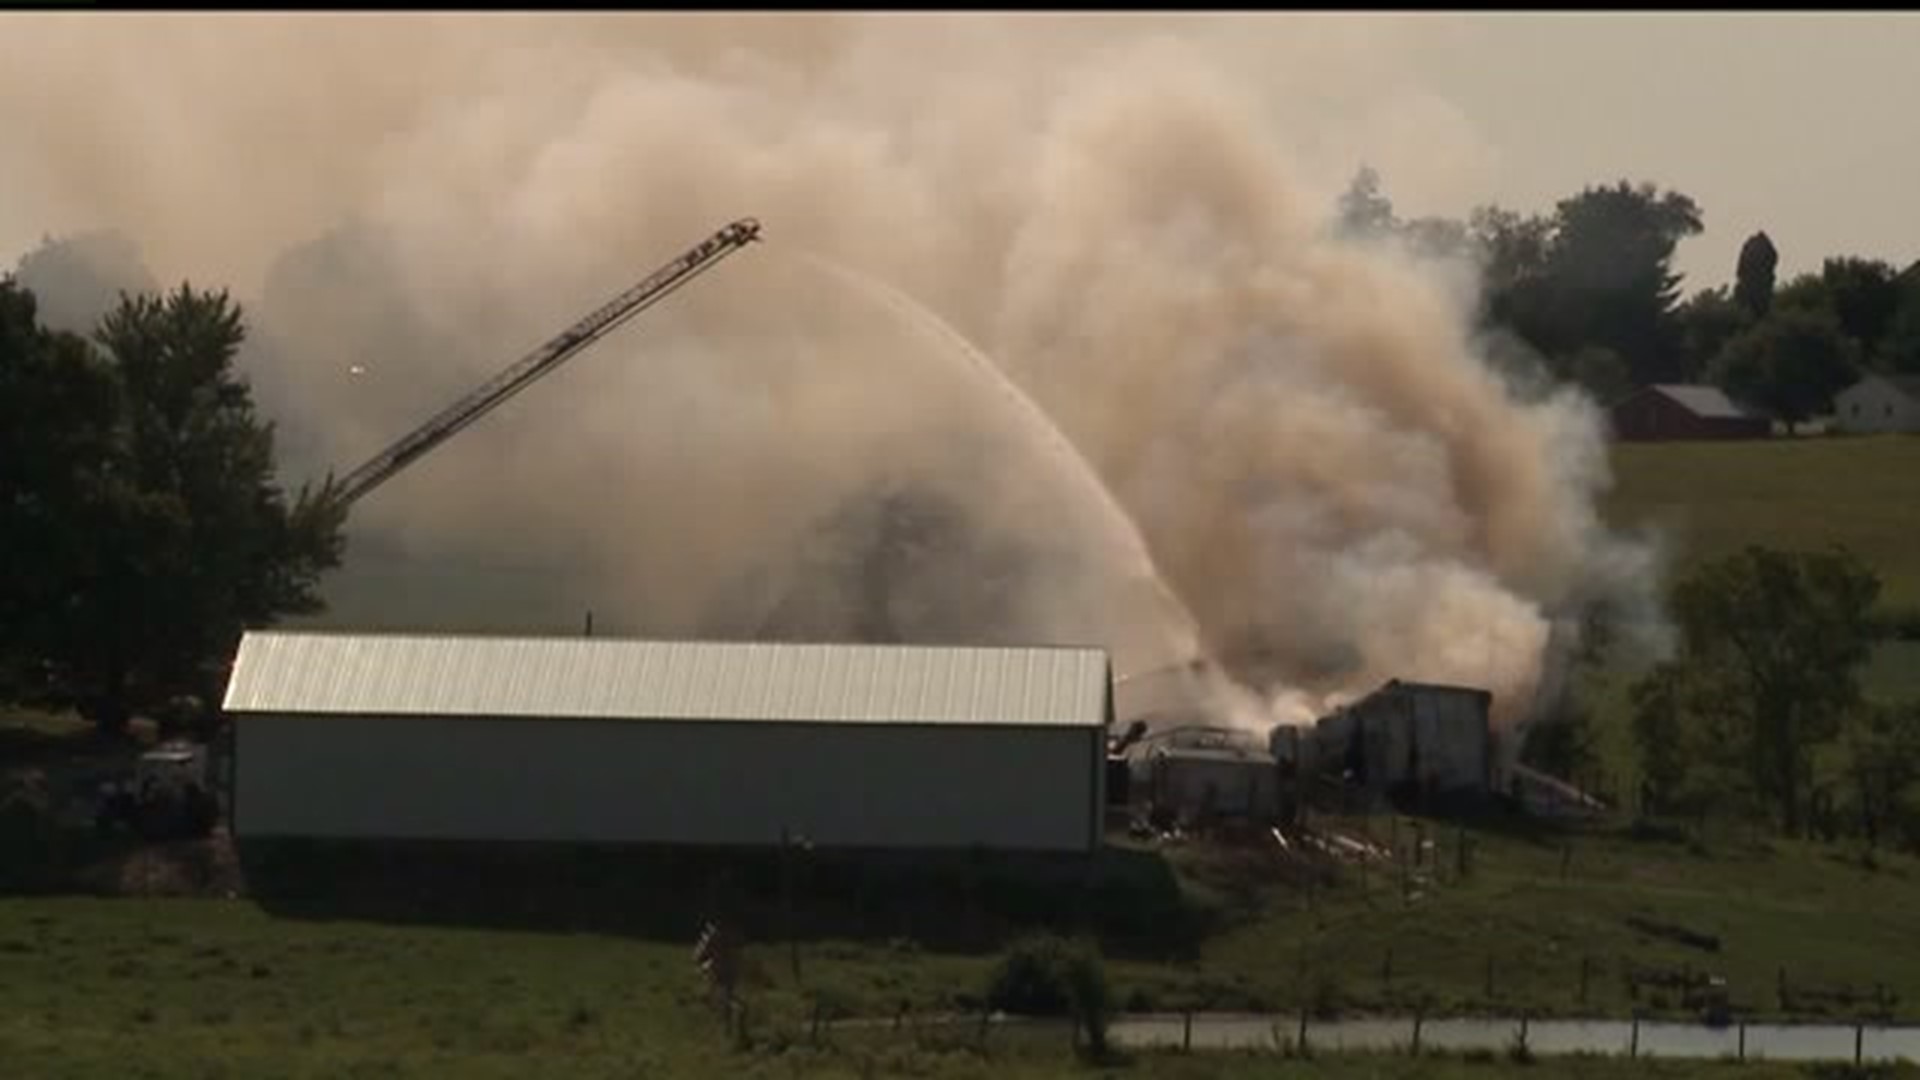 Fire crews battling barn fire in York County